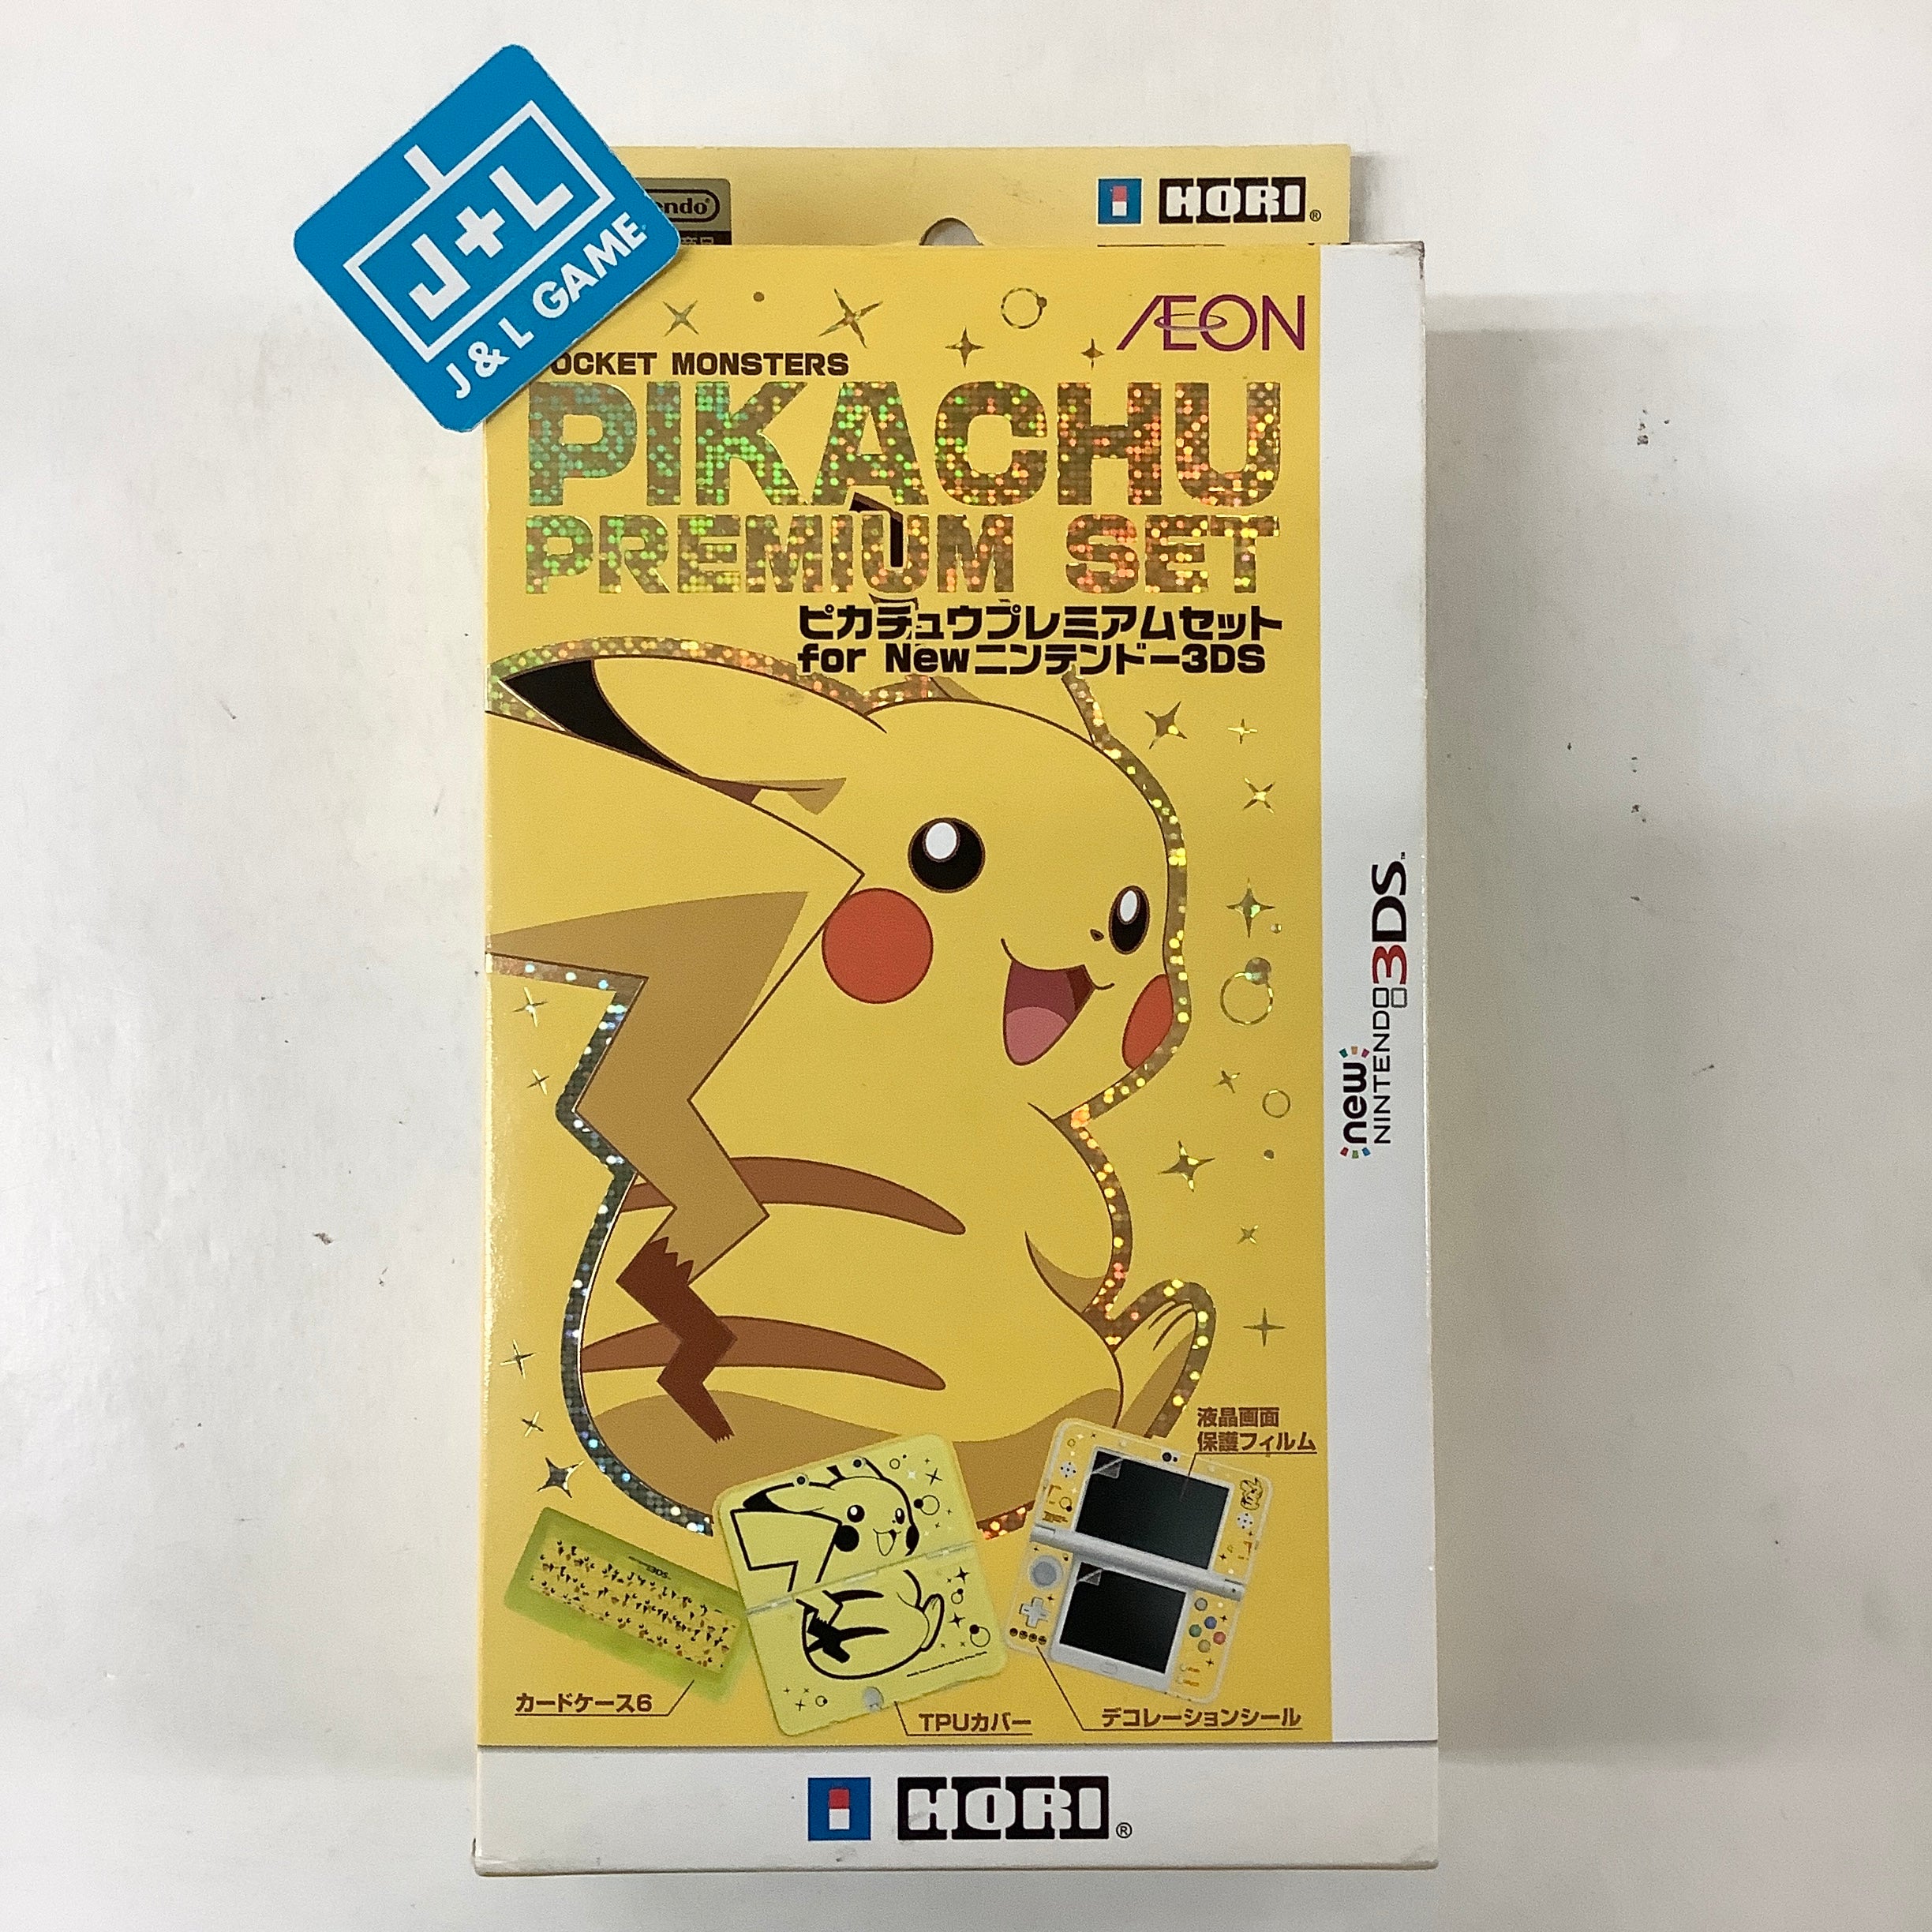 HORI New Nintendo 3DS Pocket Monsters Pikachu Premium Set - Nintendo 3DS (Japanese Import) Accessories HORI   